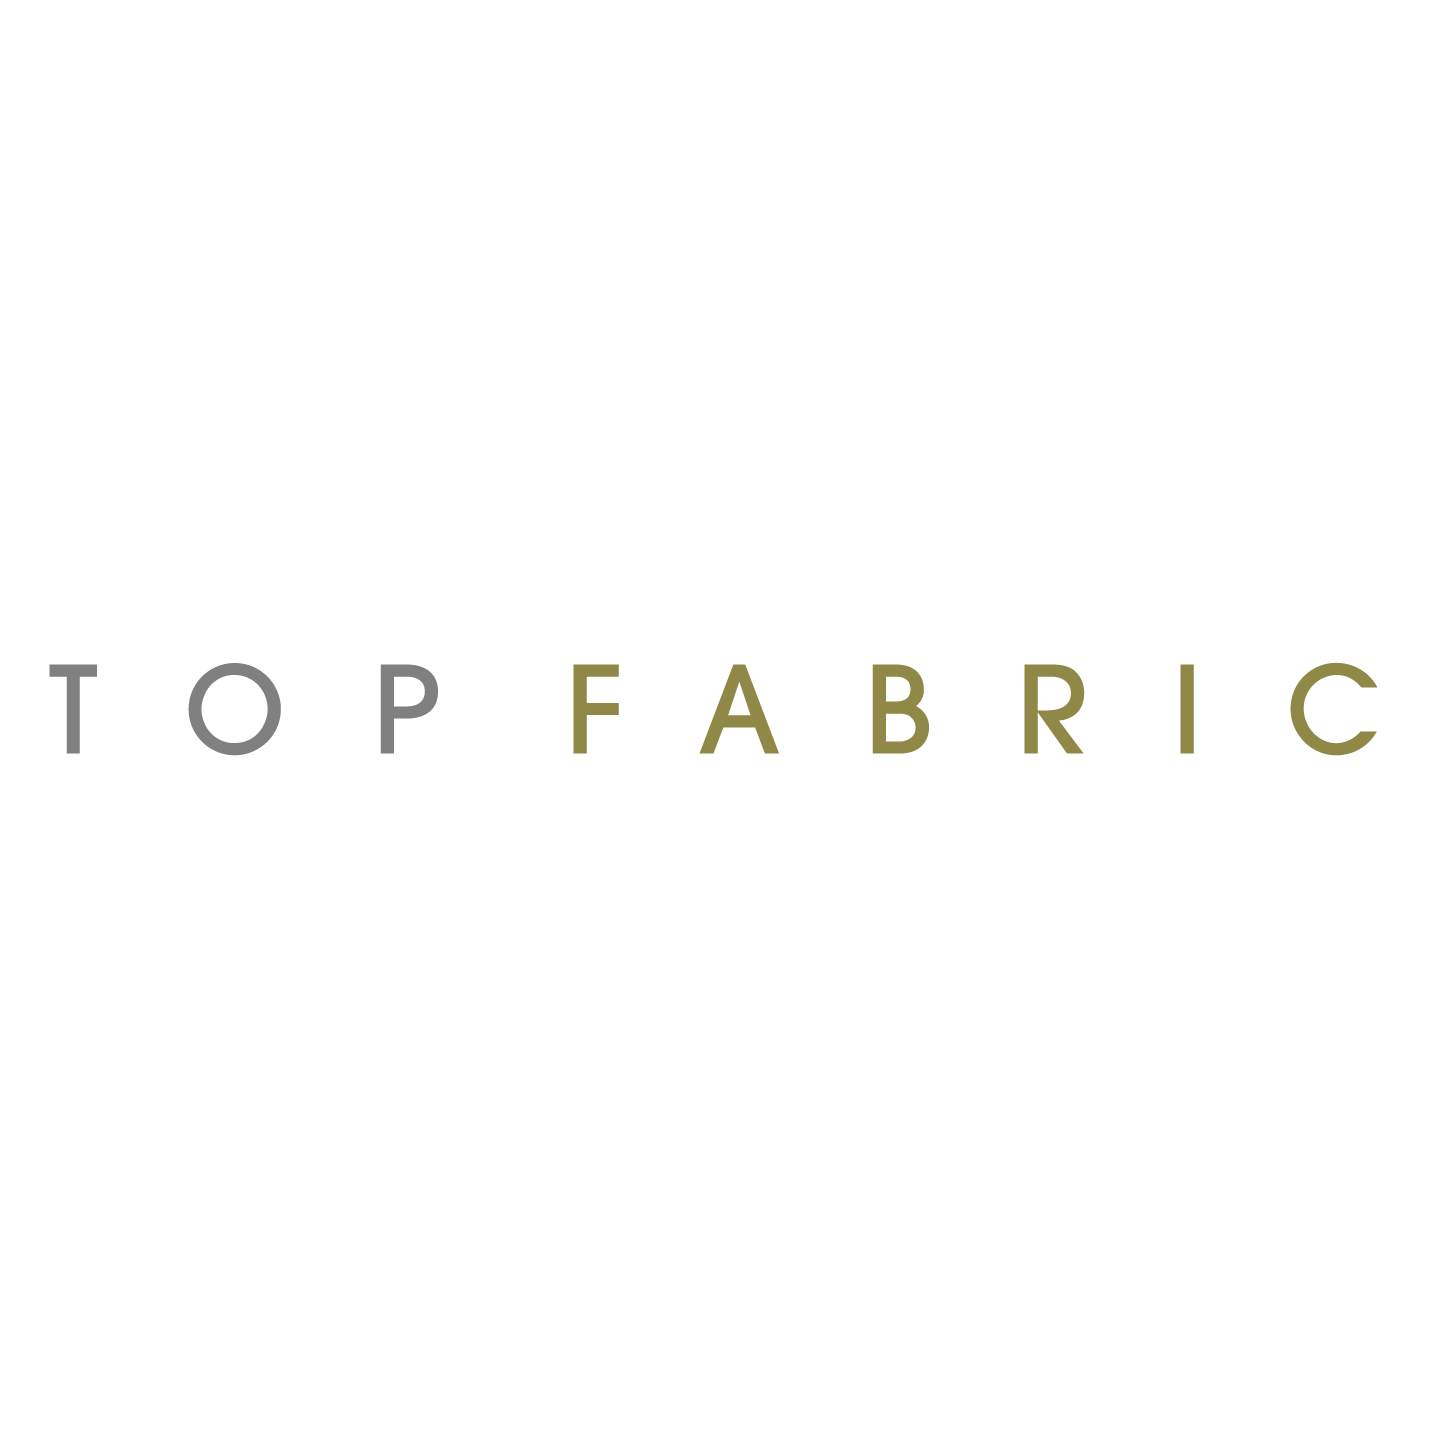 Buy fabric online - leavers lace, Scallop, Lace, Trim, blush